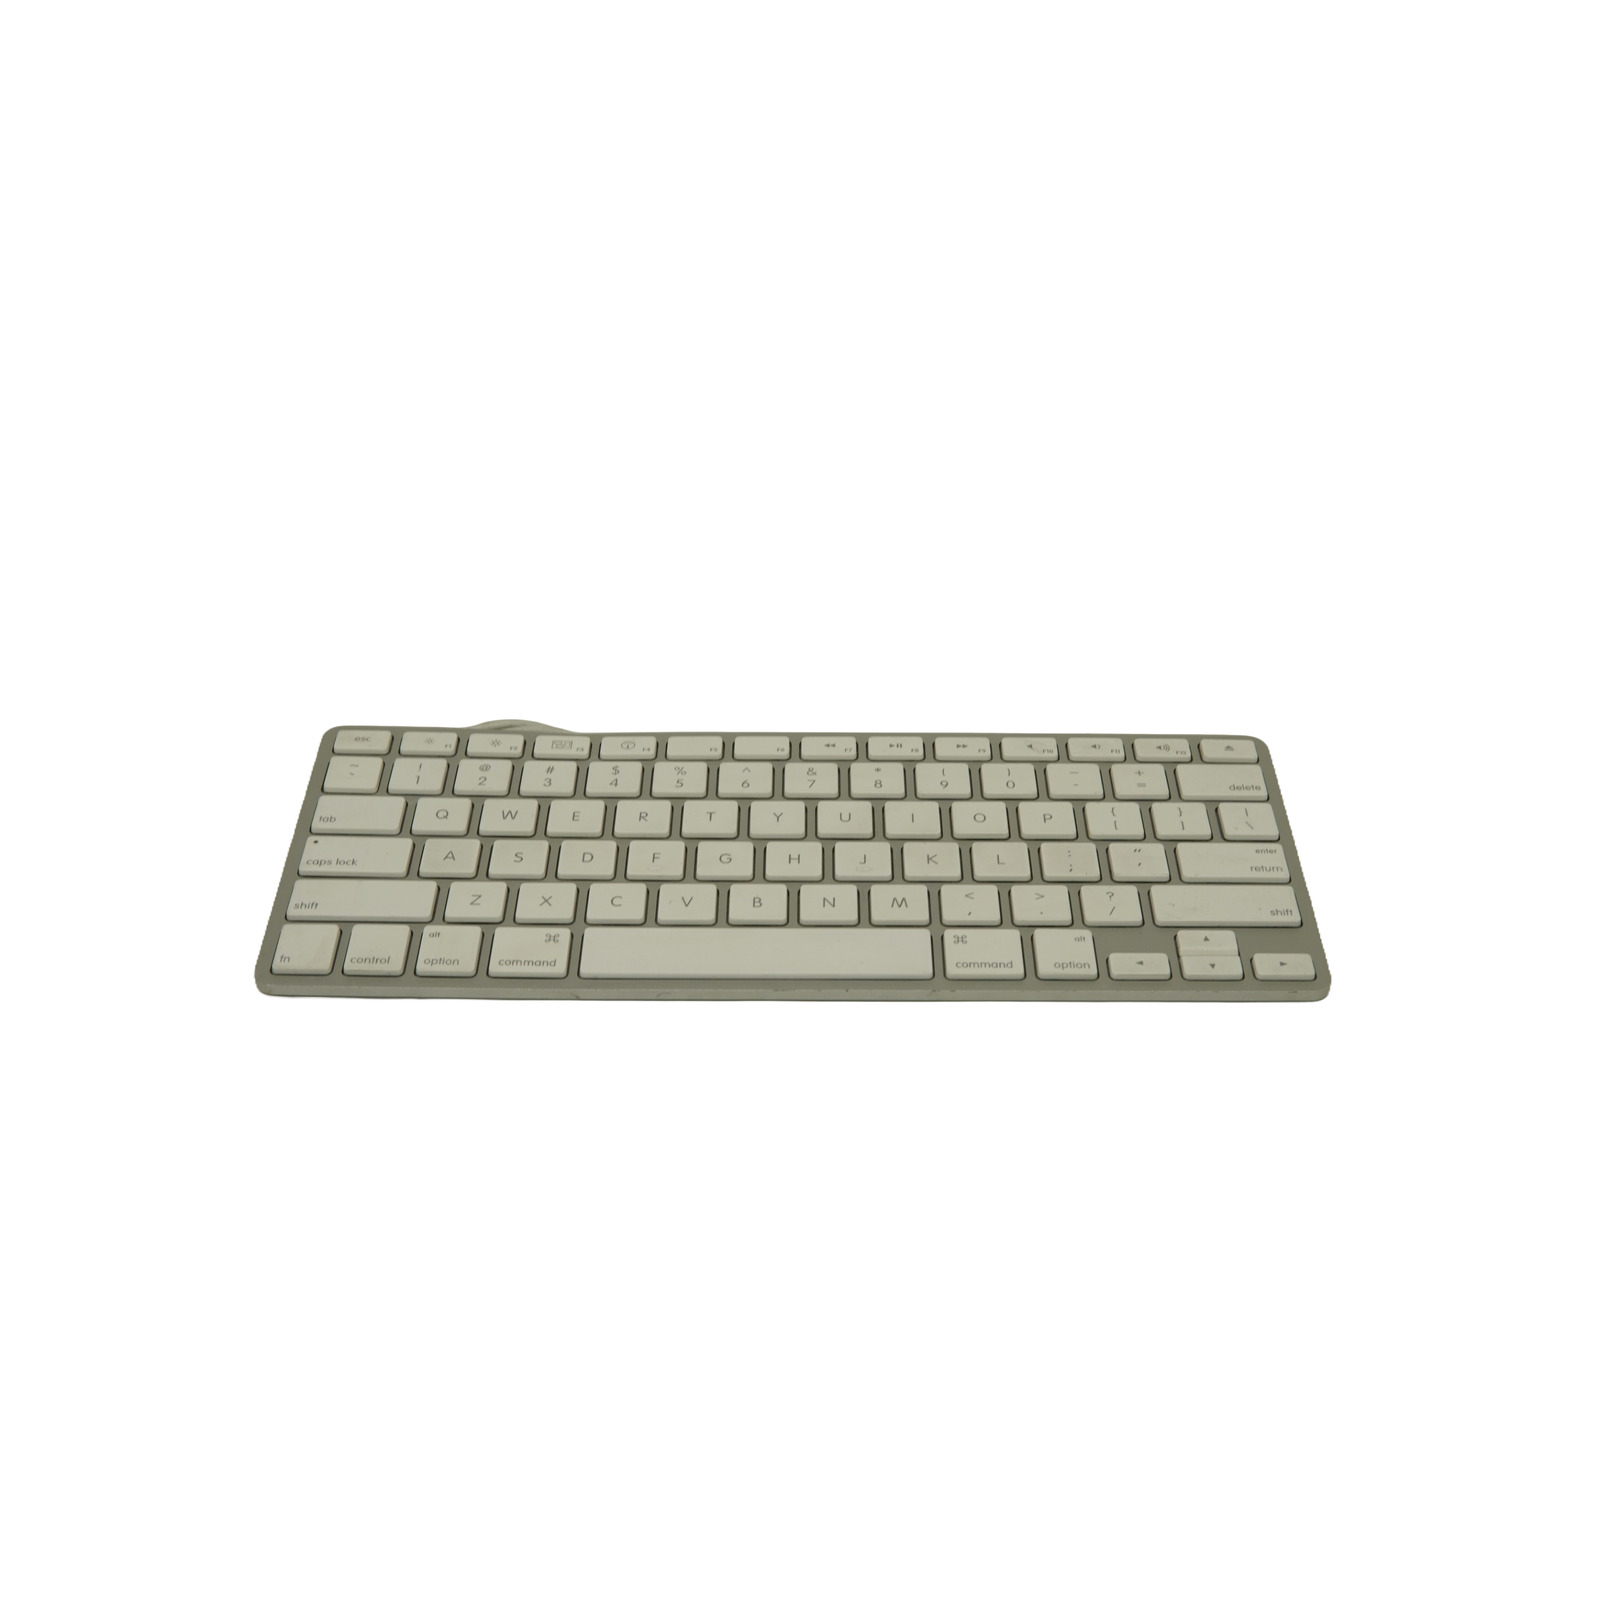 Apple A1242 Aluminum Wired USB Mini Keyboard